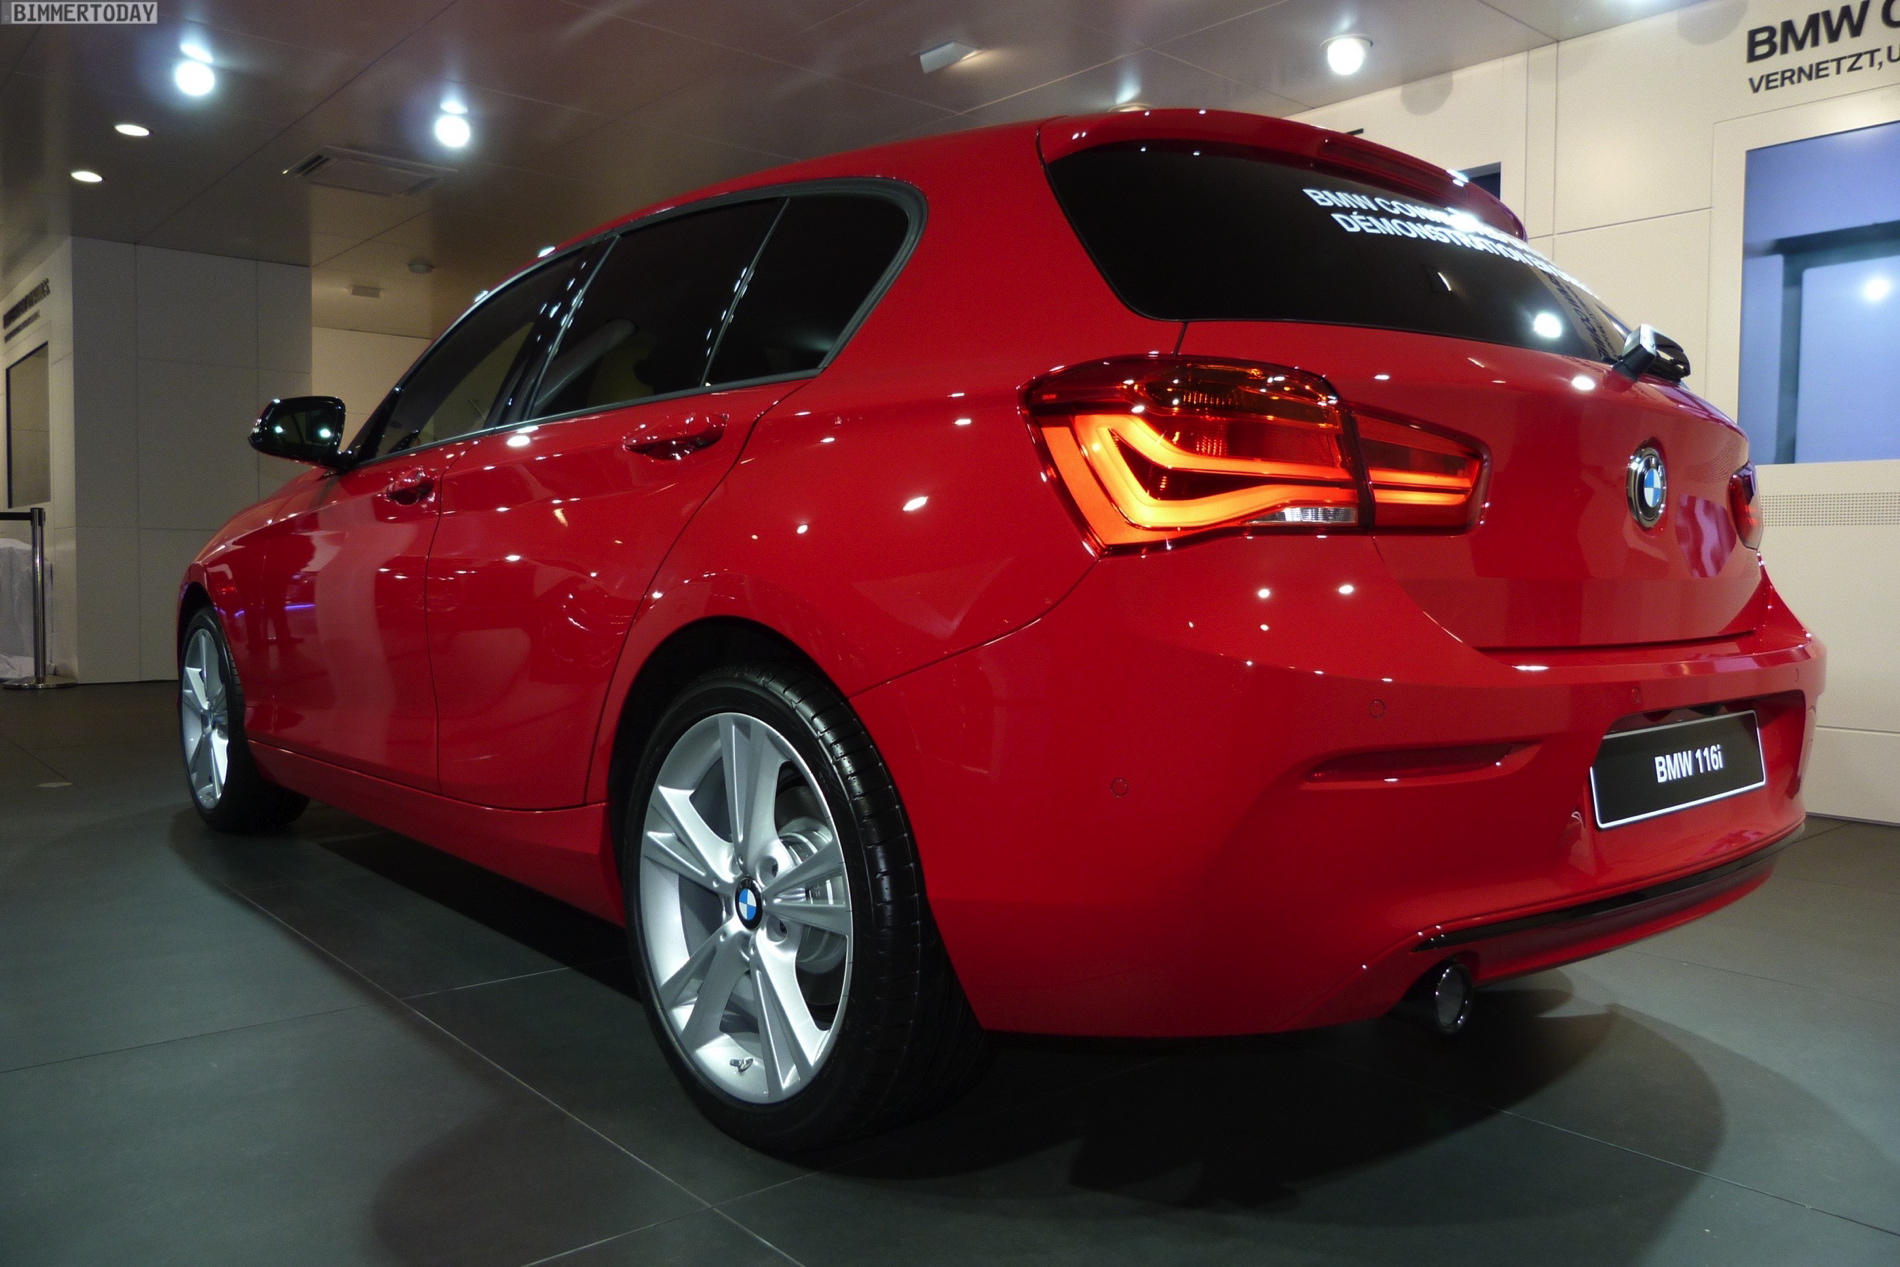 BMW-1-series-facelift-images-geneva-11.jpg